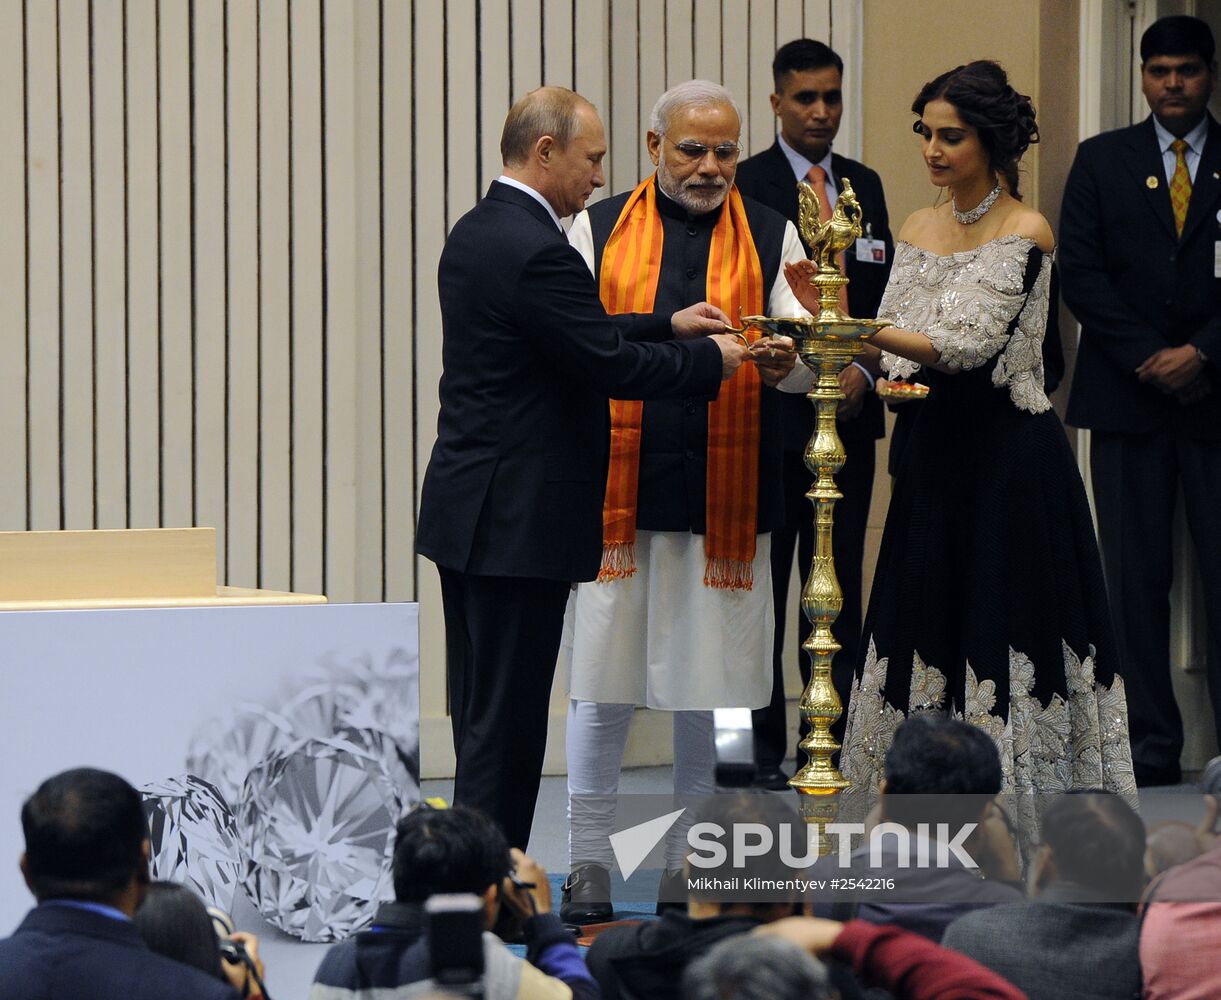 Vladimir Putin's official visit to India